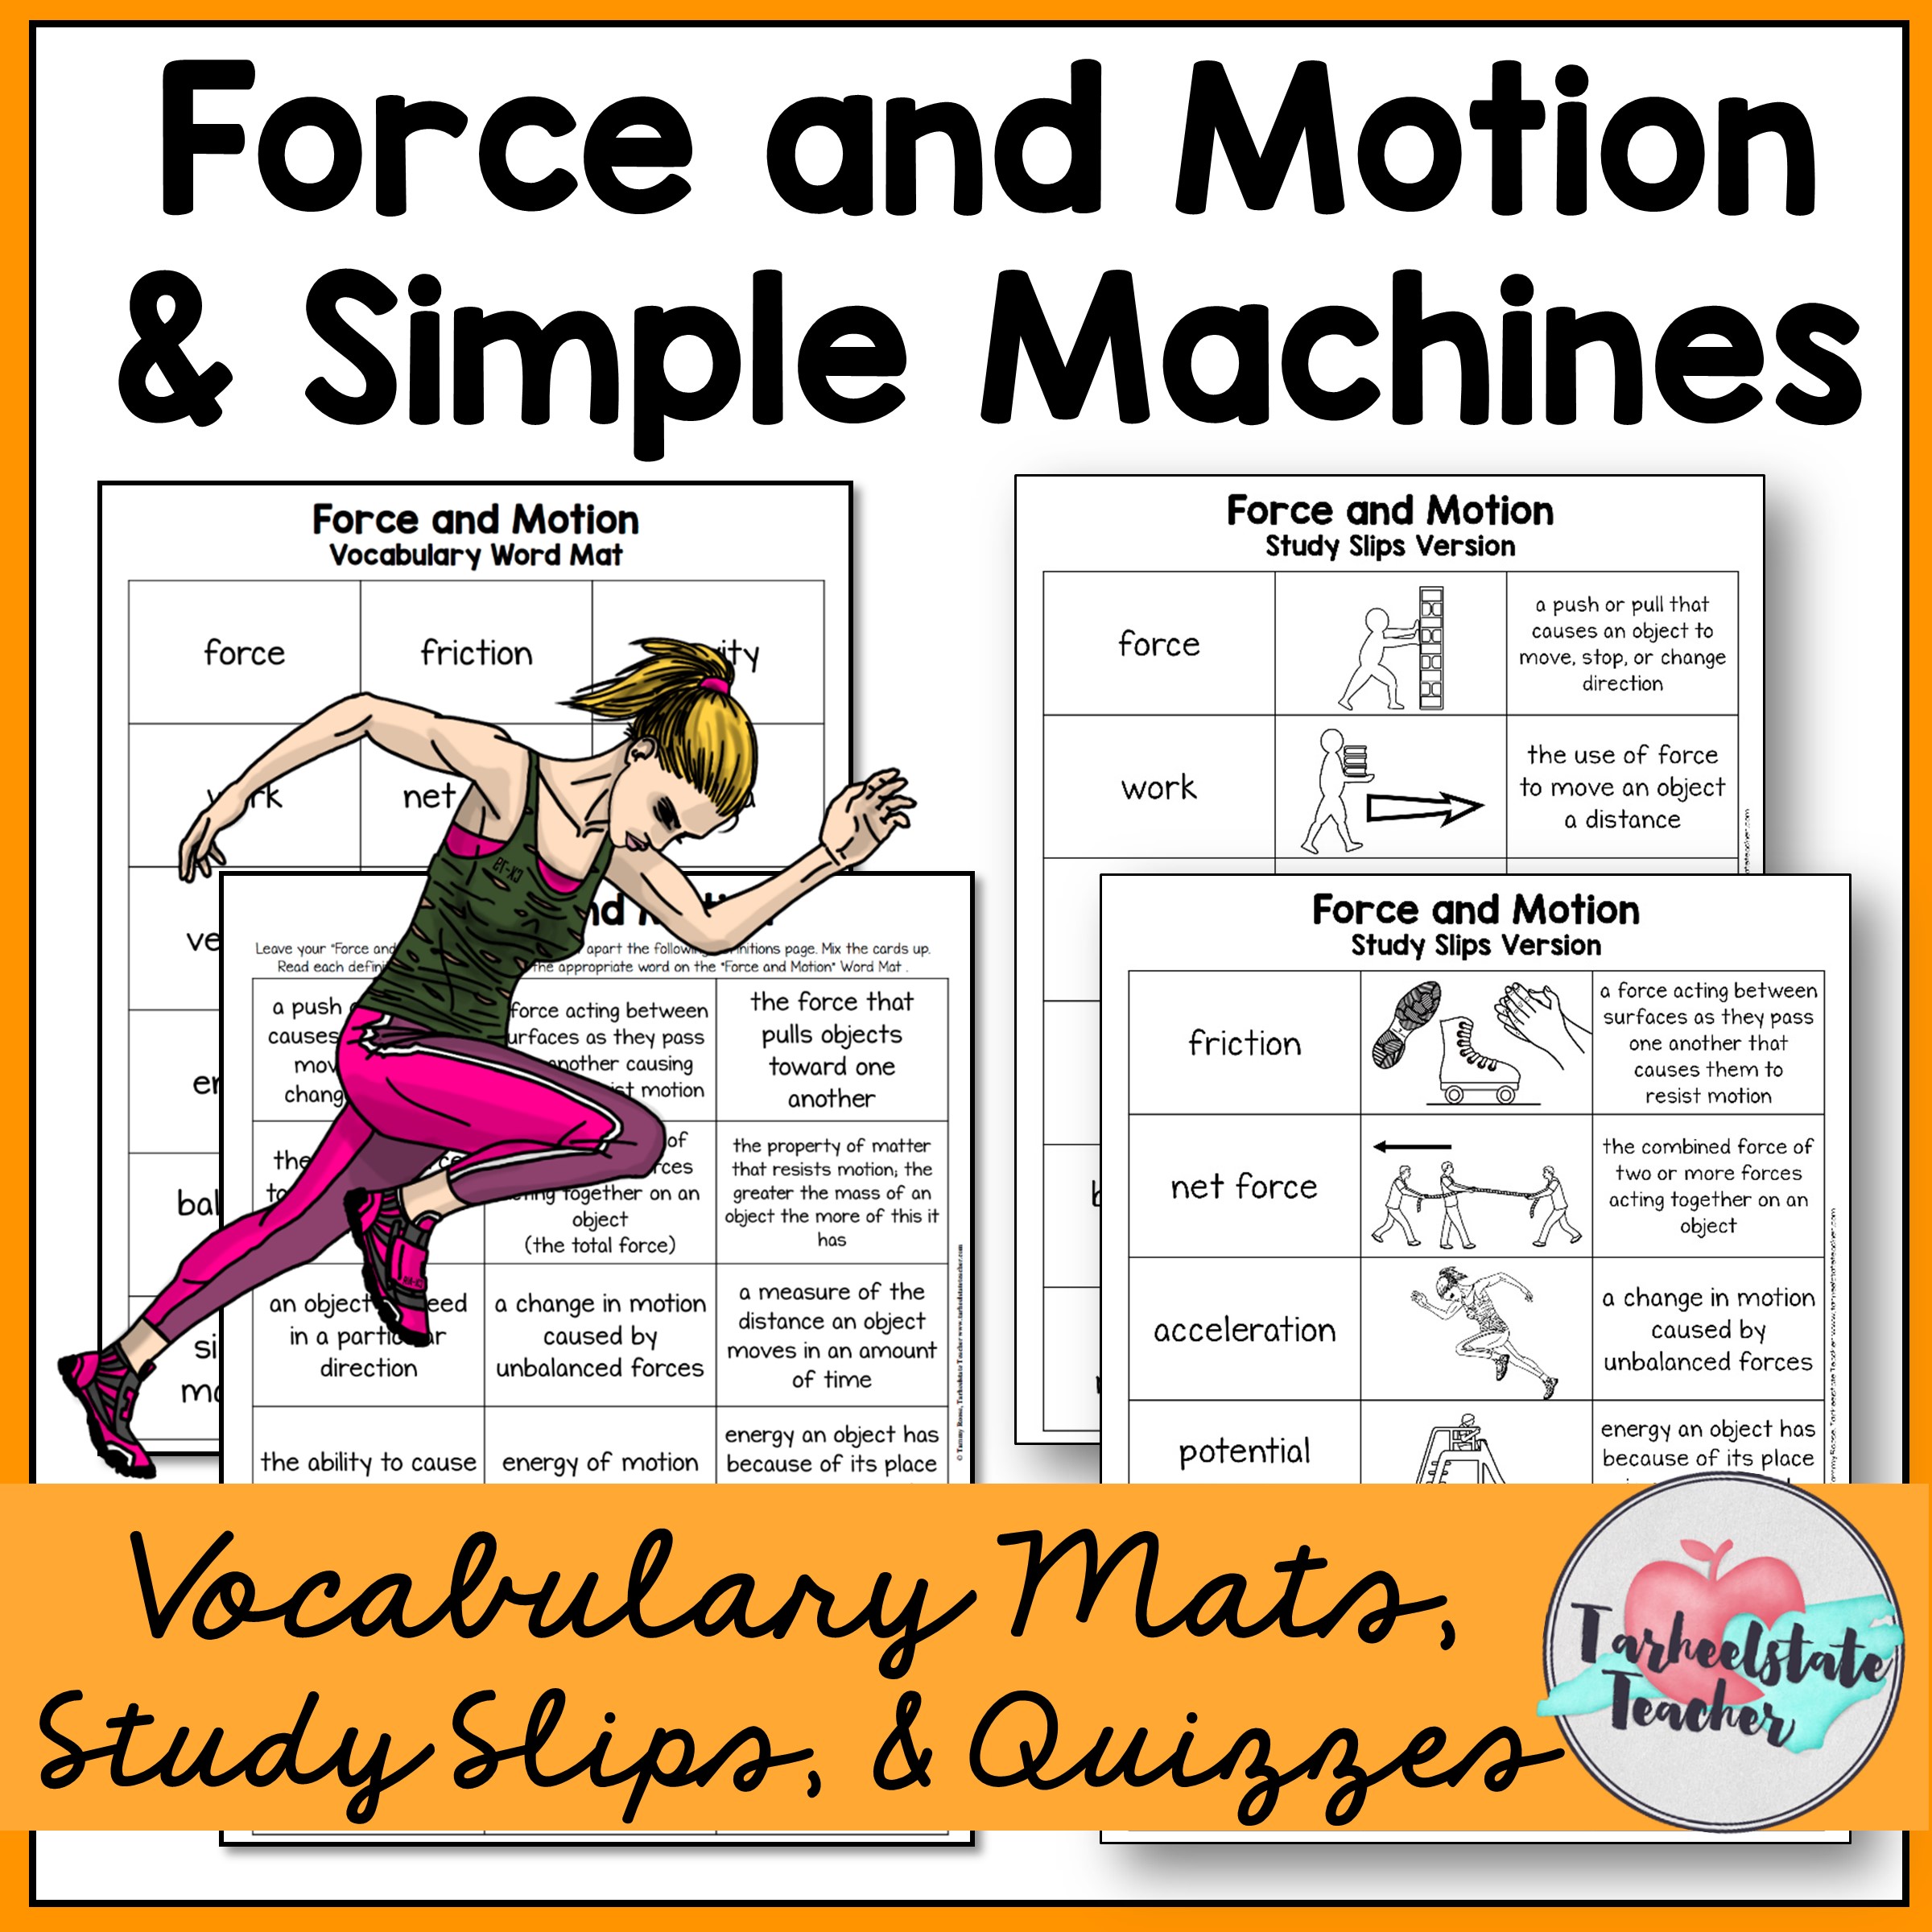 Science Vocabulary. A simple Motion. Teacher vocabulary